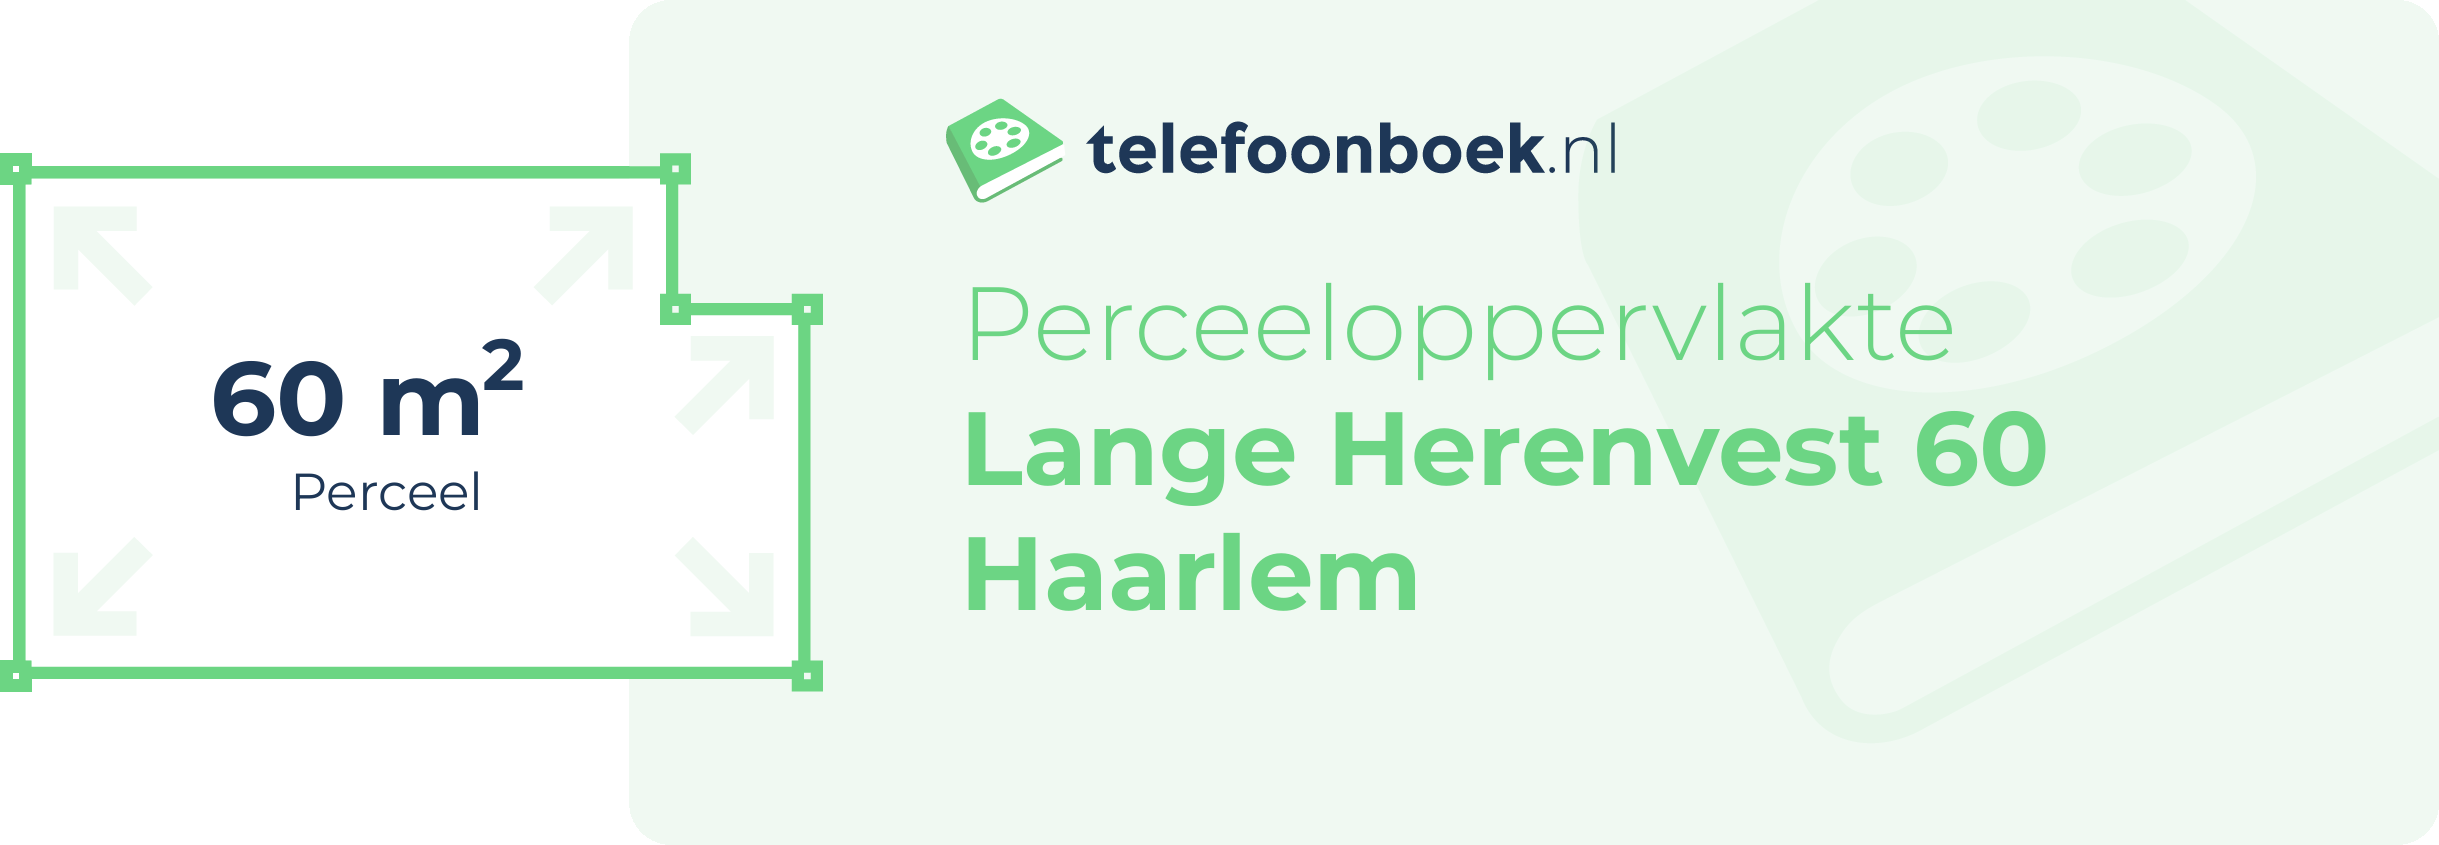 Perceeloppervlakte Lange Herenvest 60 Haarlem